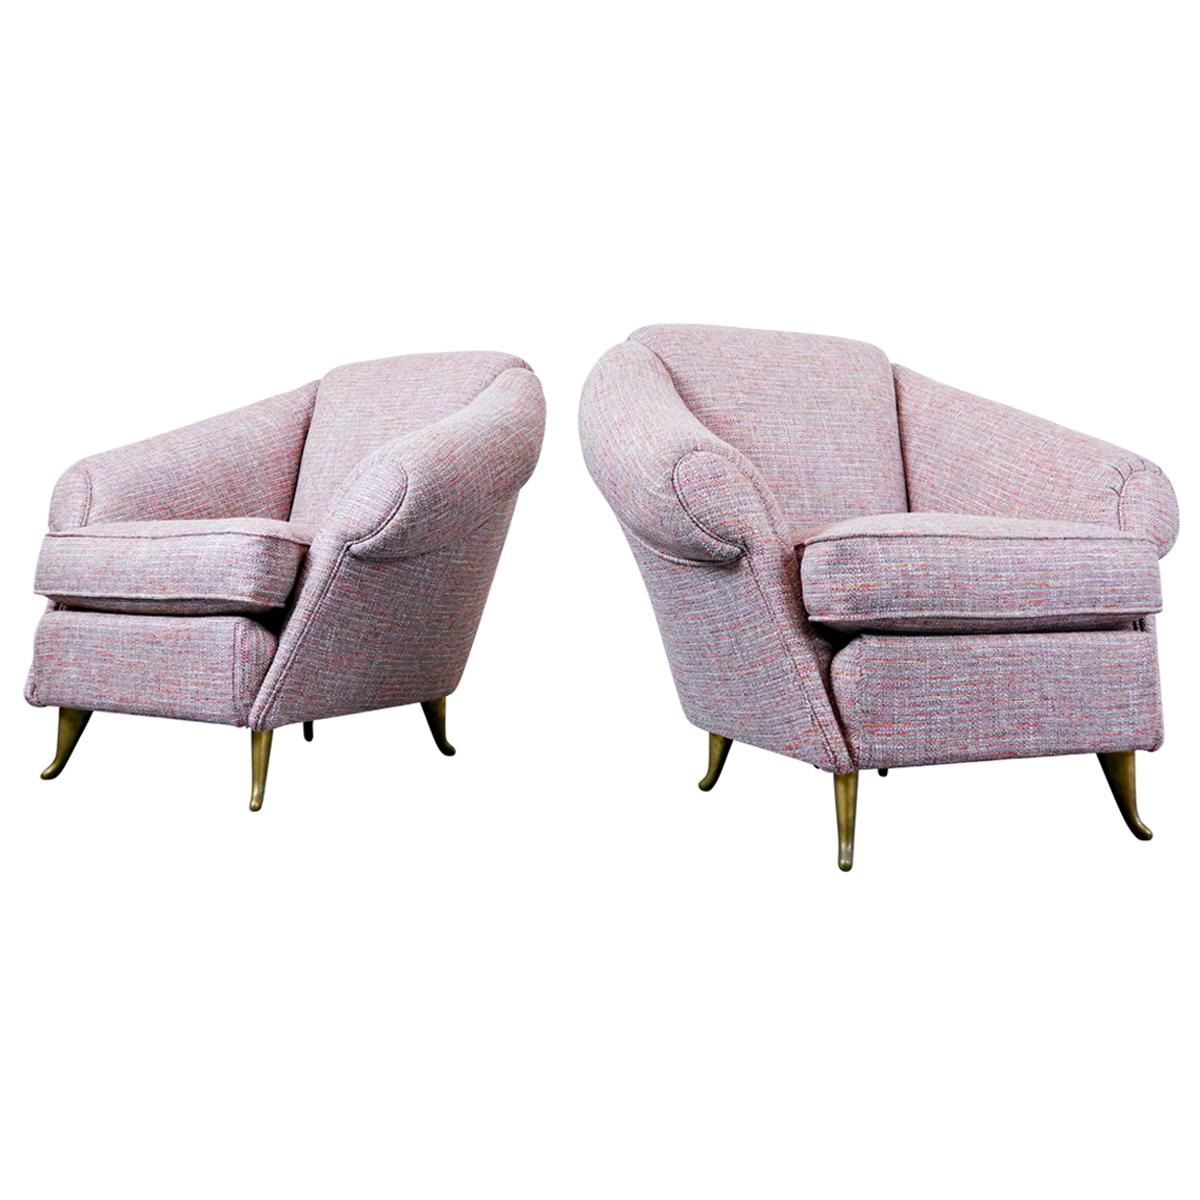 Pair of Mid-Century Modern Light Pink Italian Armchairs, 1950s, New Upholstery